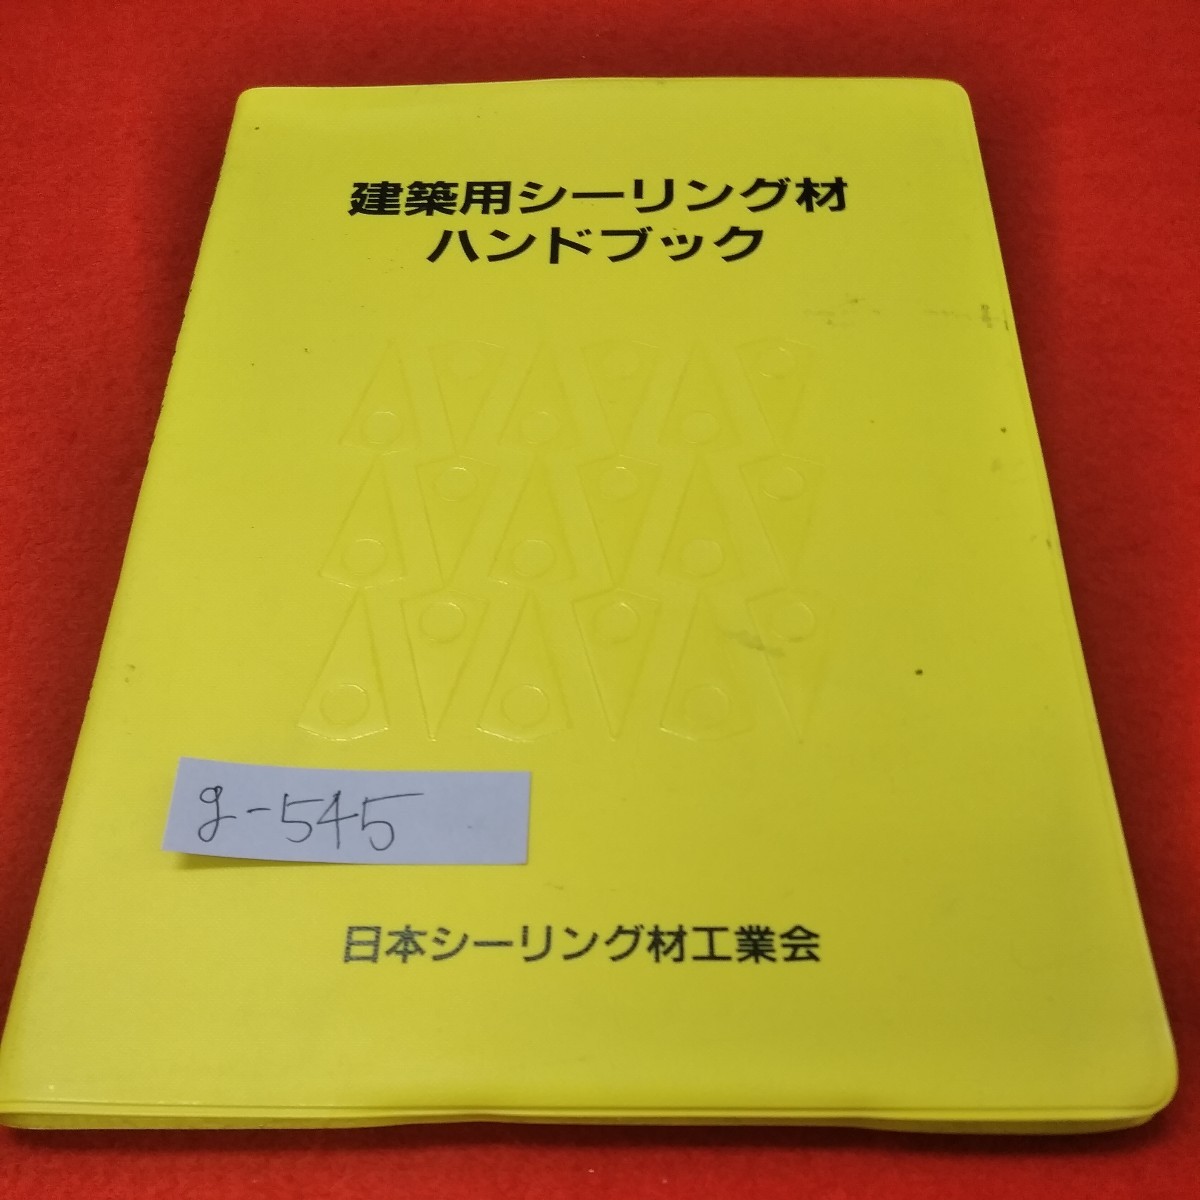 g-545※1　建築用シーリング材ハンドブック。日本シーリング材工業会。1997年9月1日1版1刷発行。発行・日本シーリング材工業会。_汚れ有り。